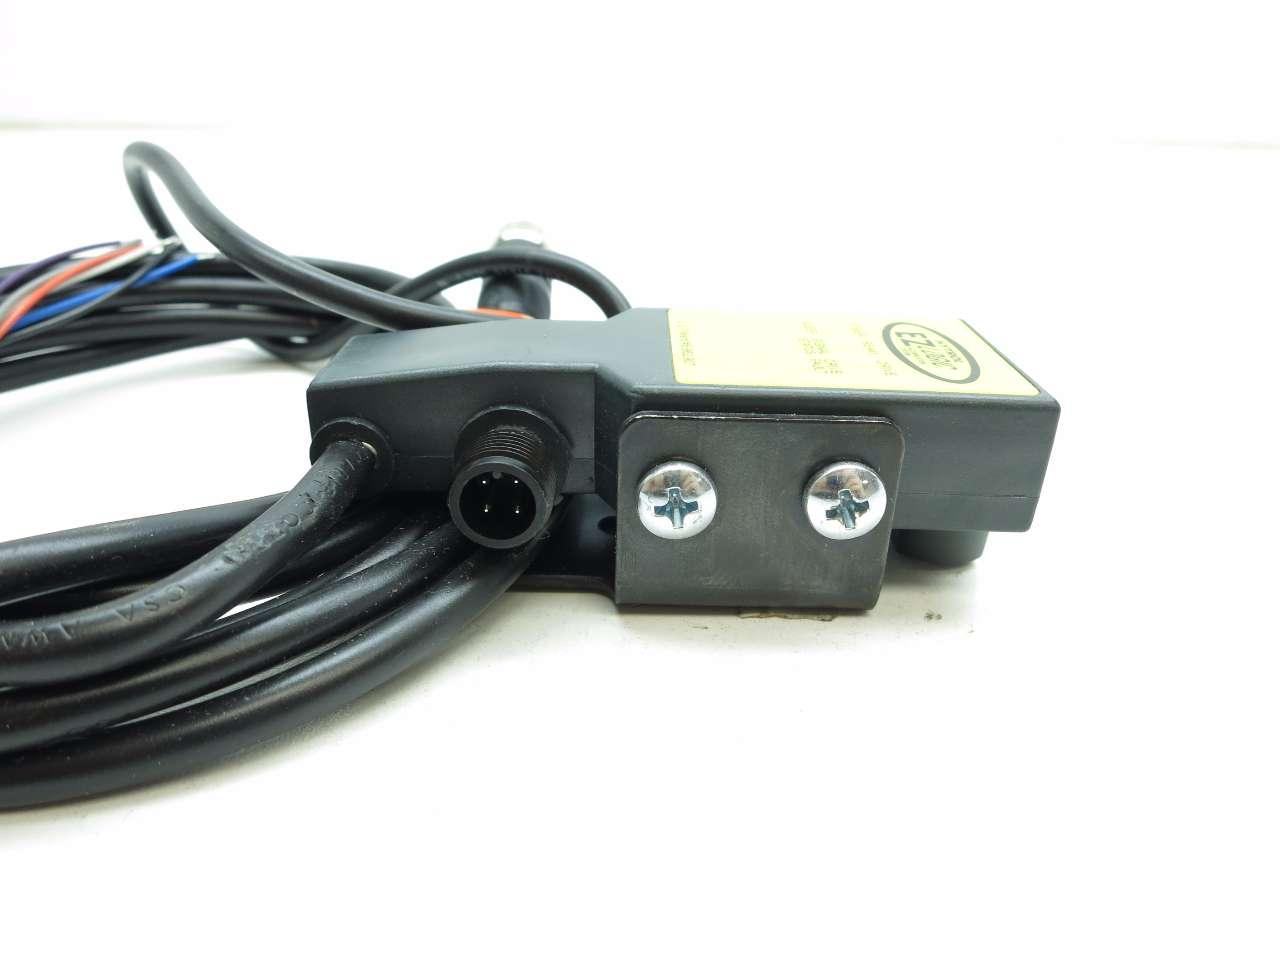 Hytrol 032004 EZ Logic Sensor Laser Diffuse Isolated I/O Conveyor Zone Control 